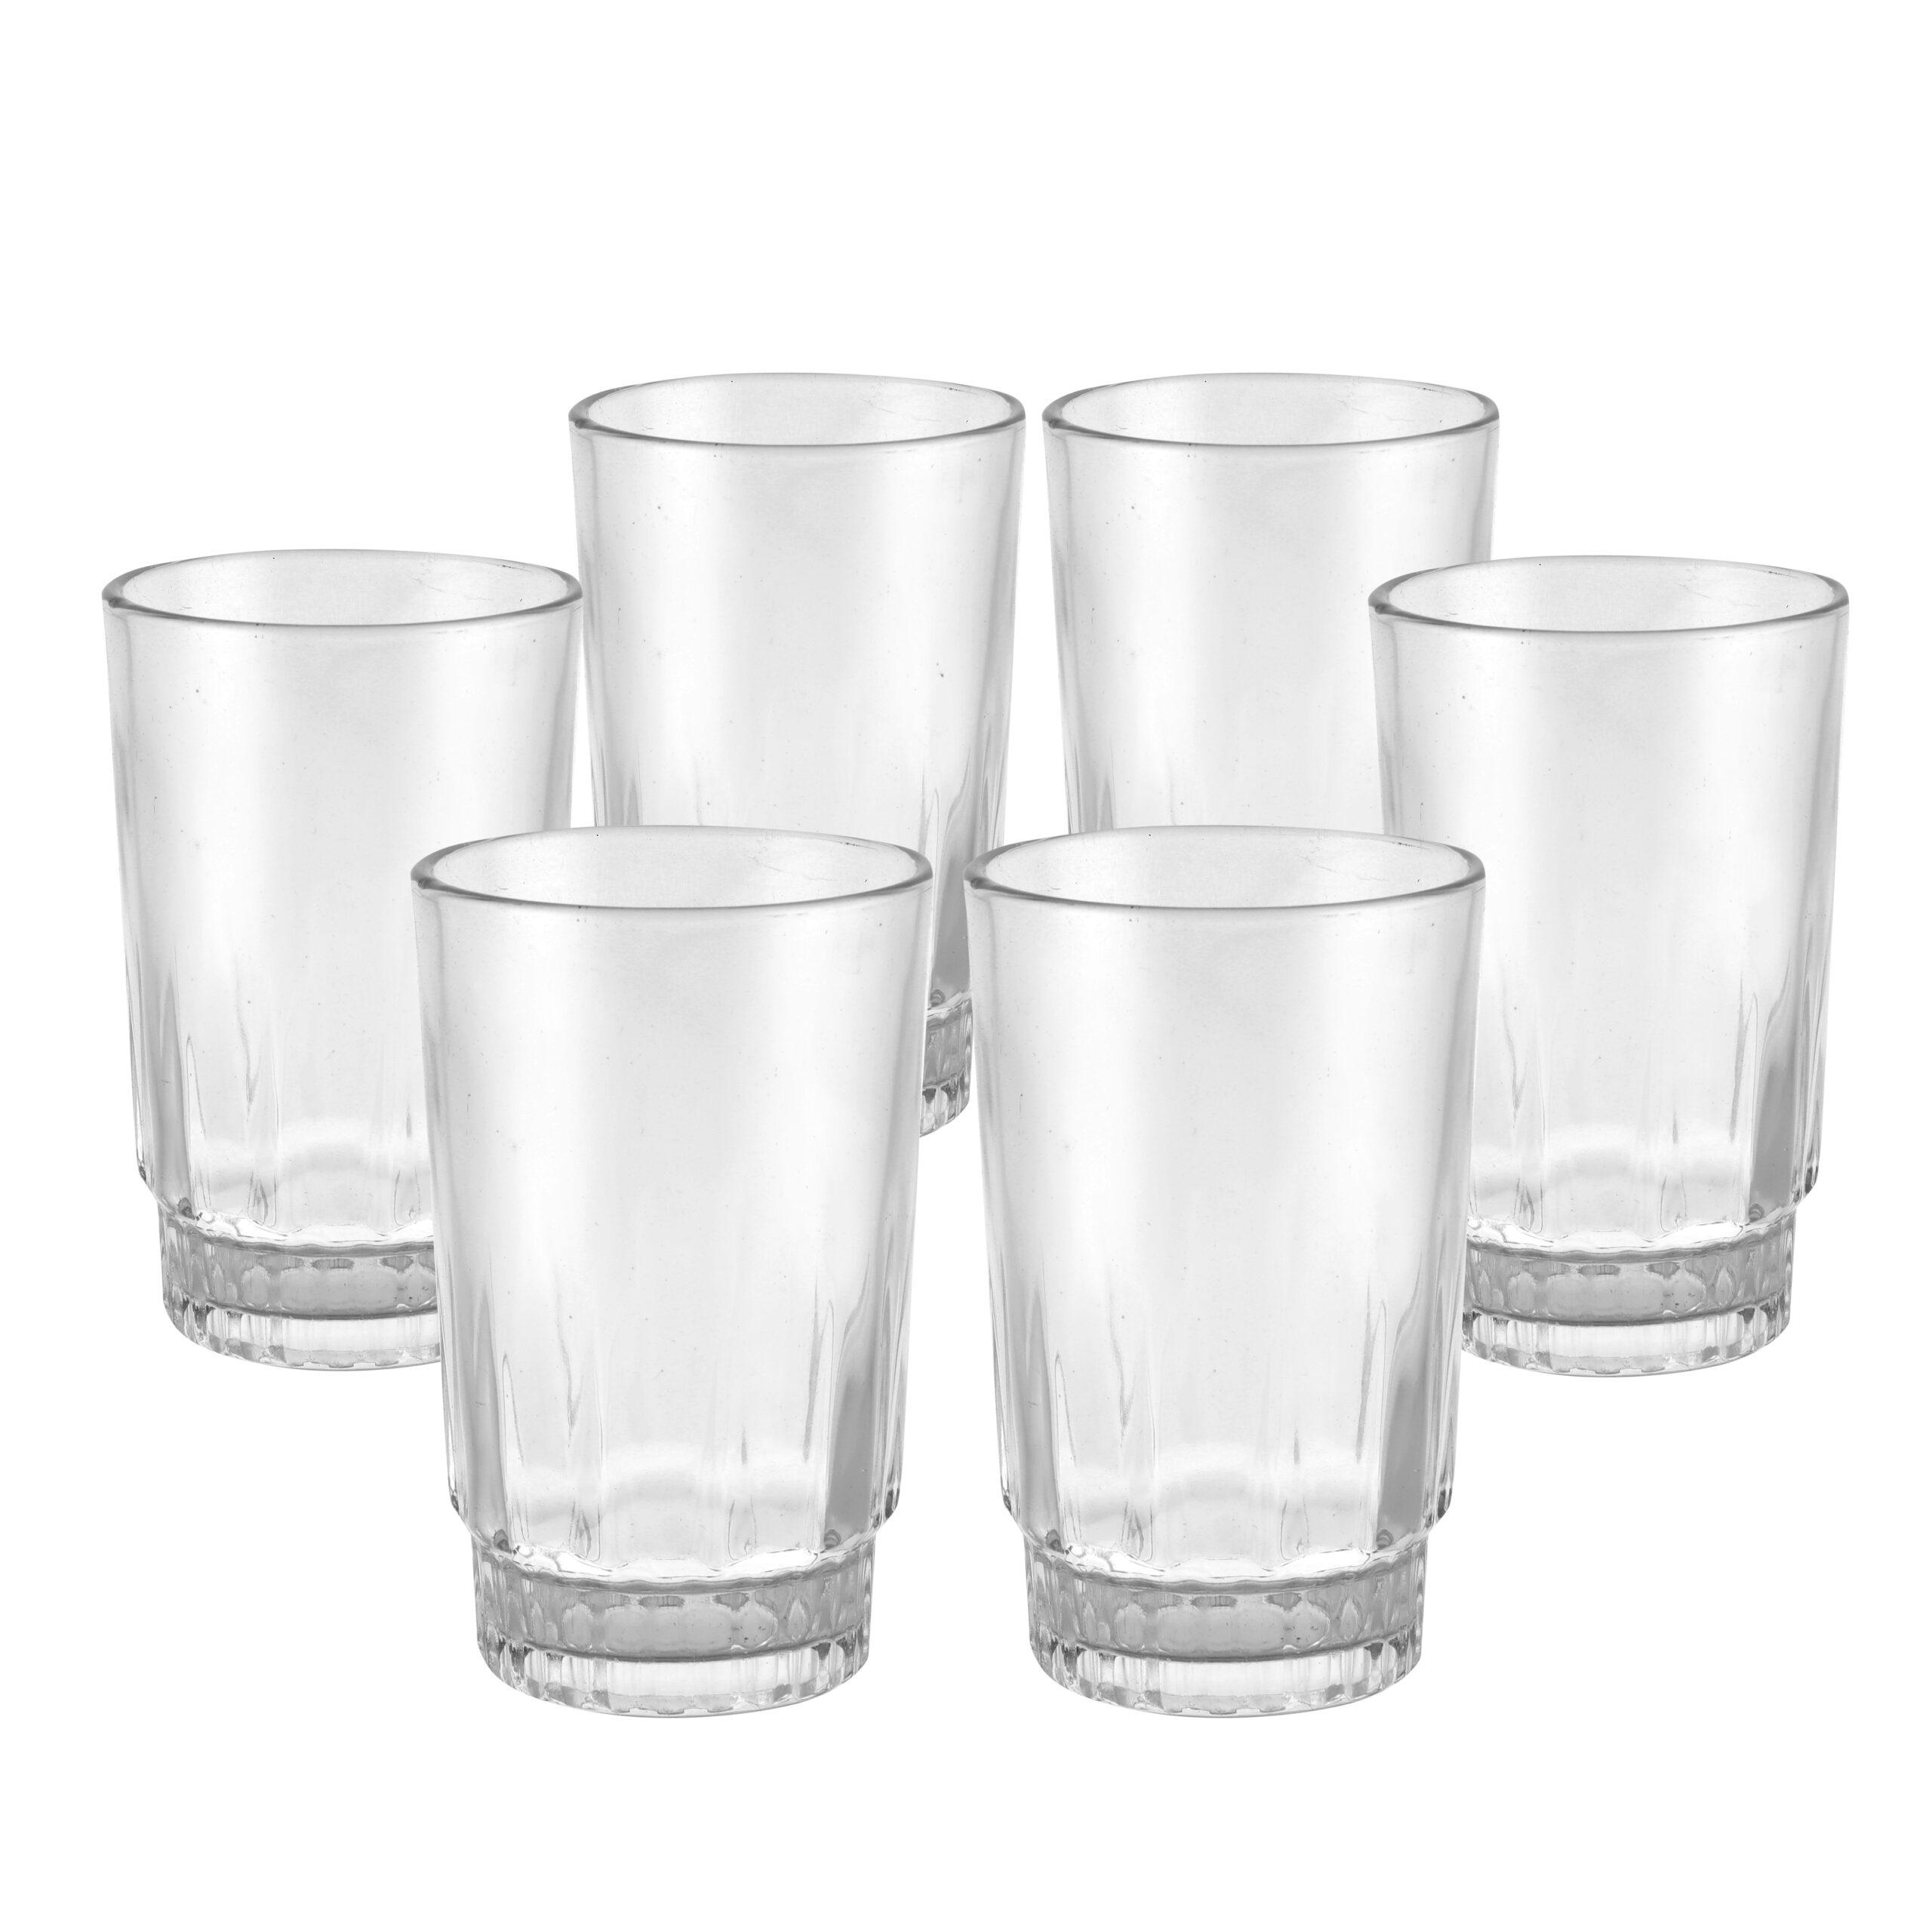 طقم كاسات عصير زجاجي 6 قطع 240 مل Royalford - 6Pcs 240Ml Glass Tumbler - Portable Water Cup Drinking Glass - cG9zdDo0MDM0NzA=